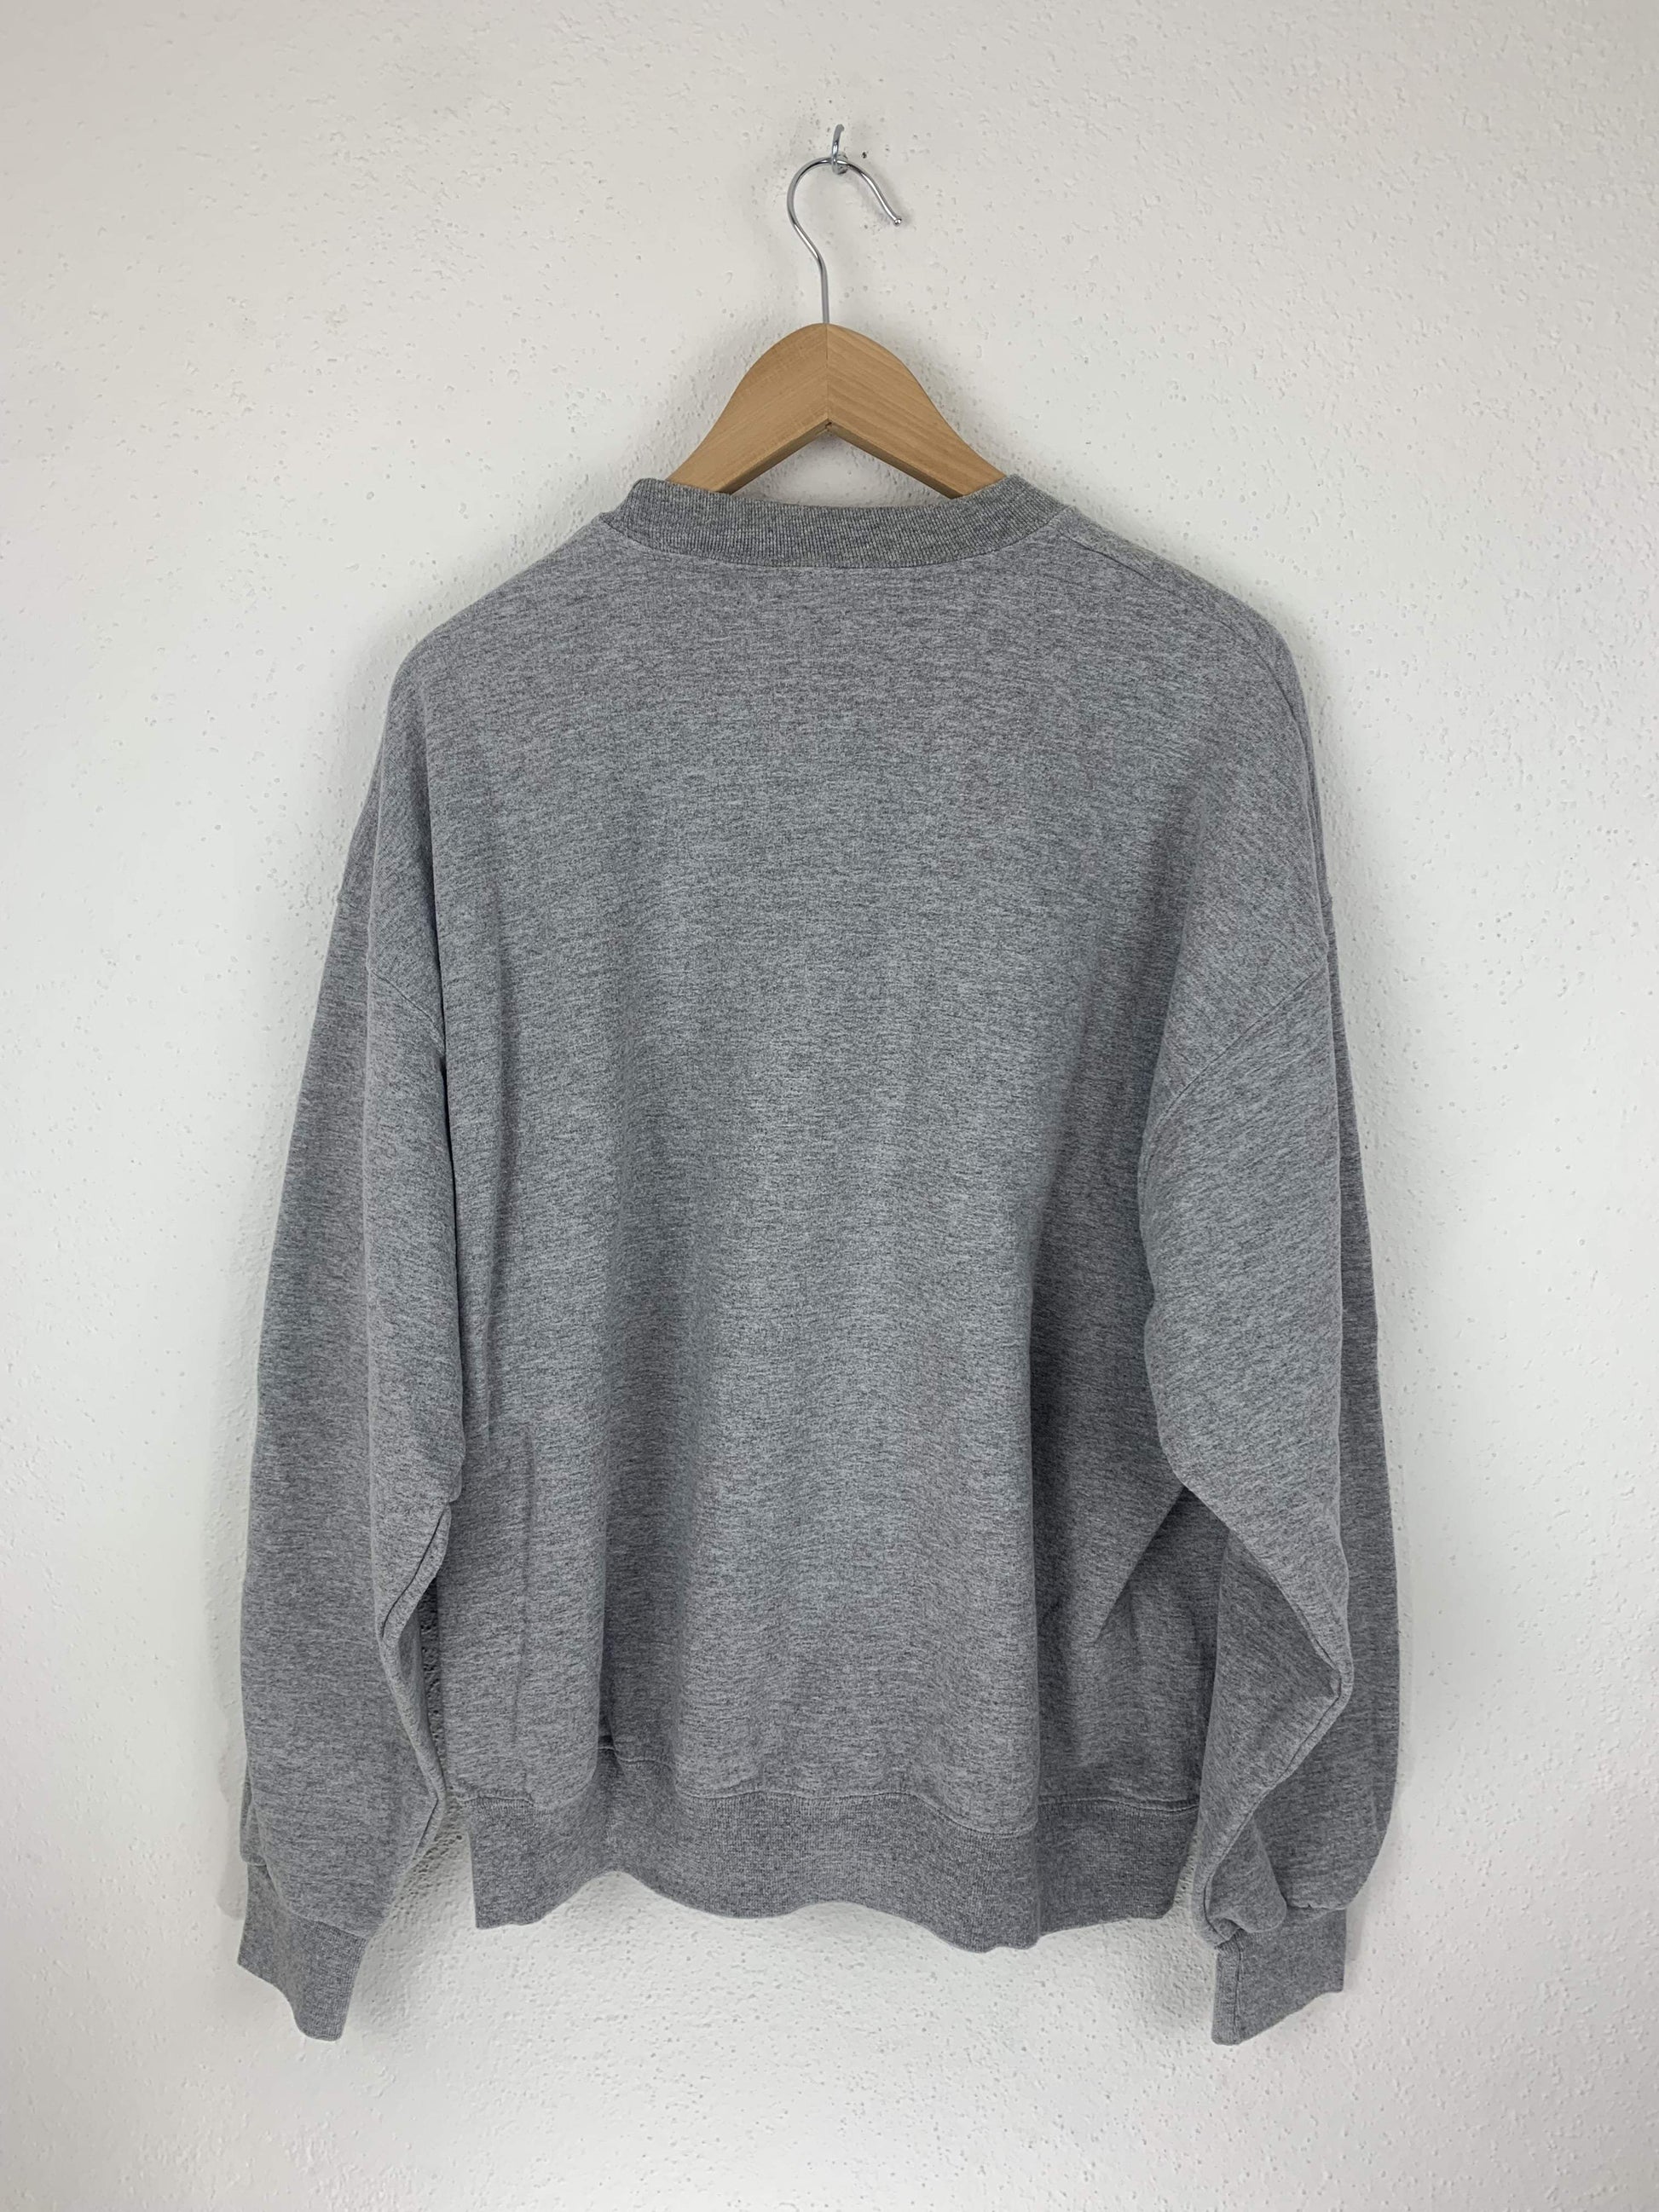 Vintage Basic Sweater - XL.